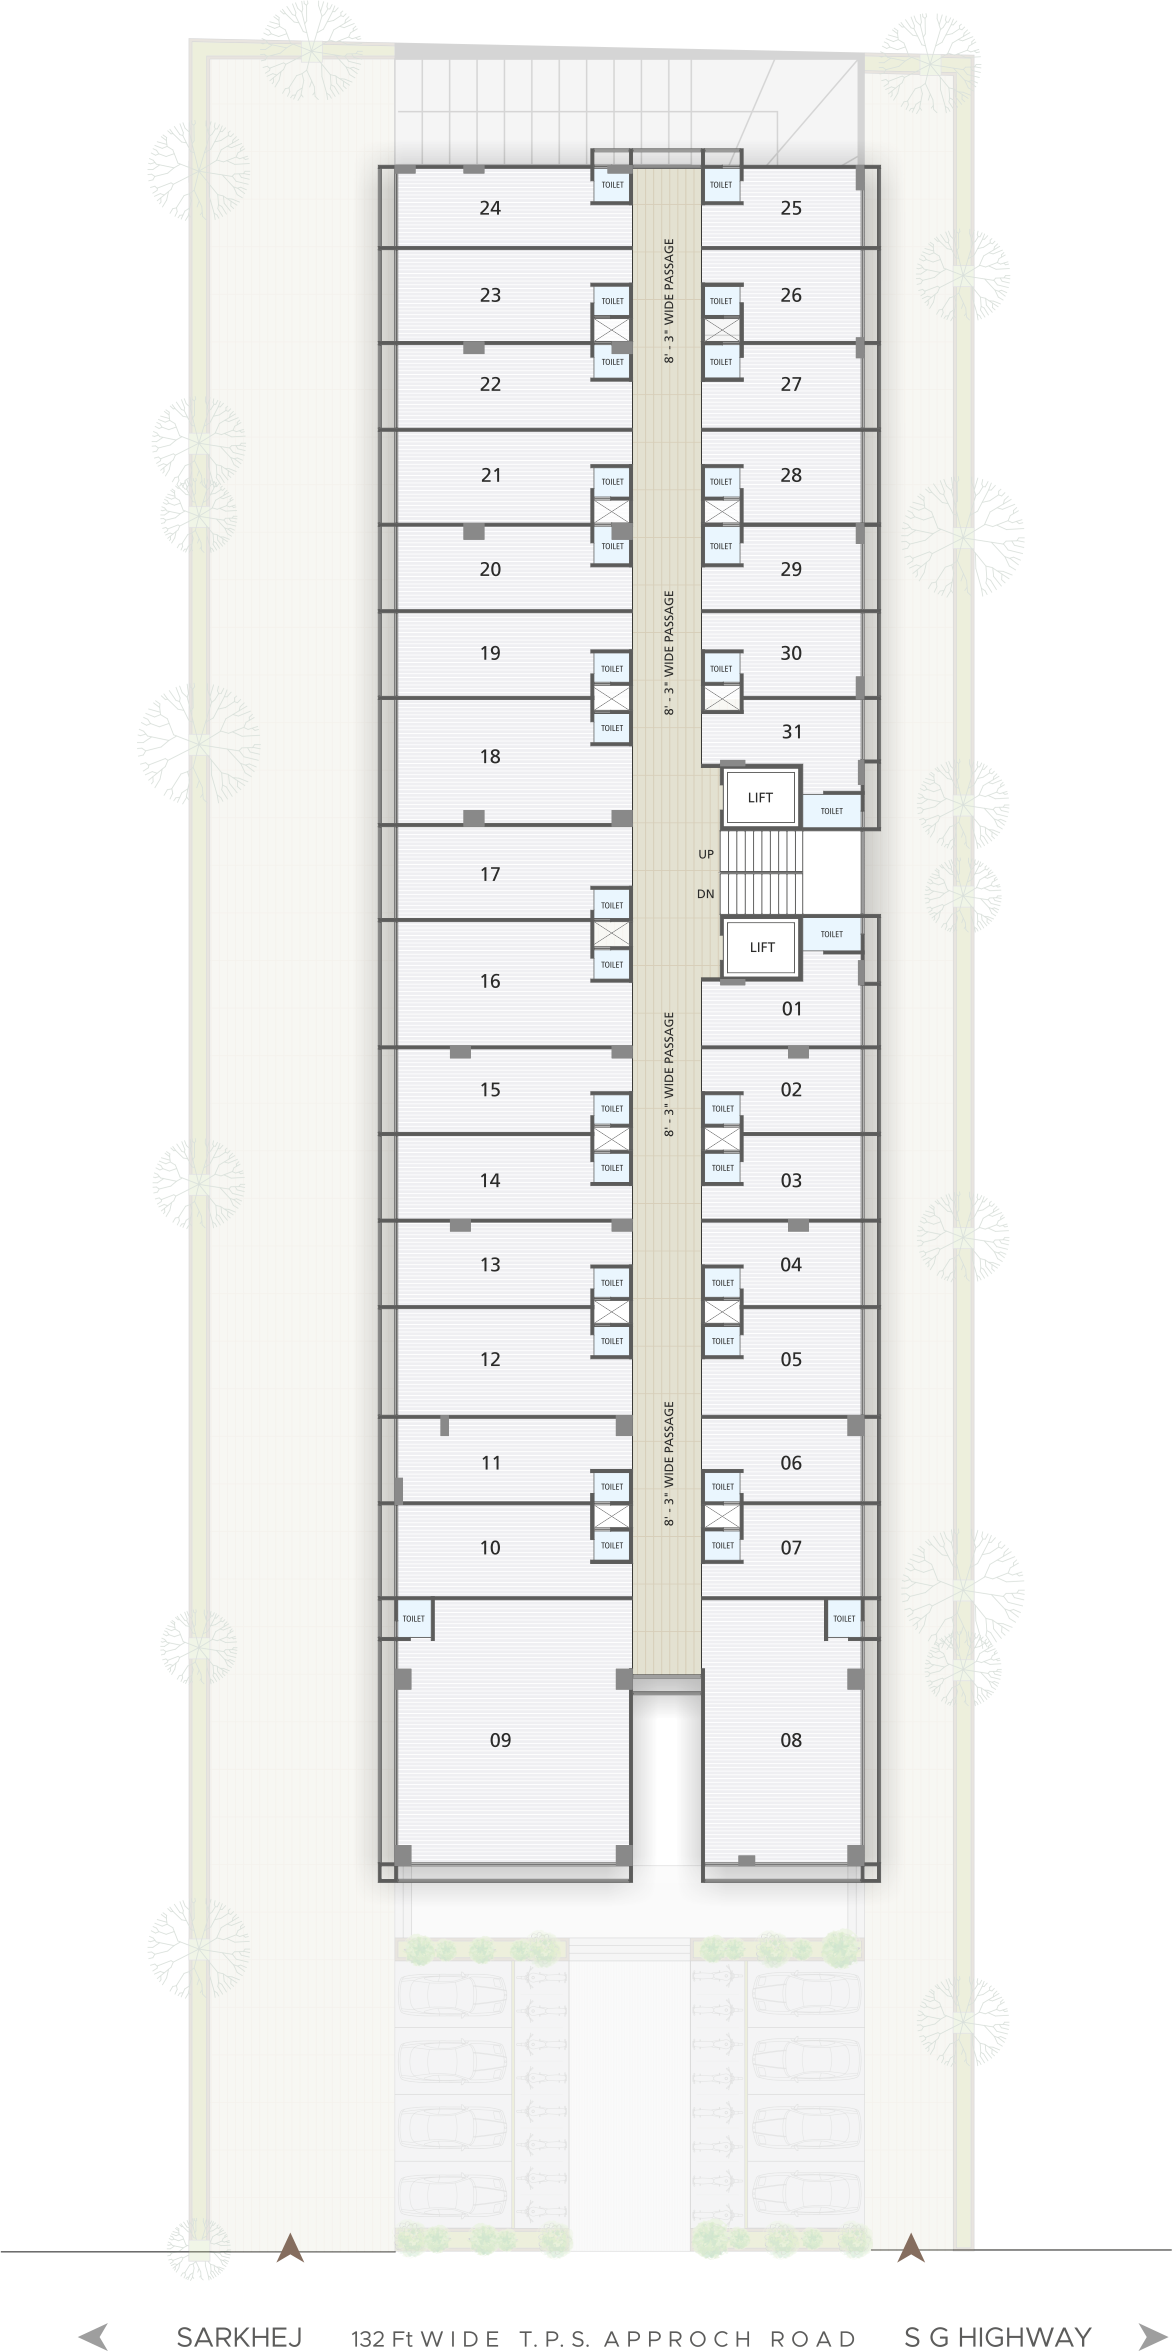 Third to seventh floor floorplan